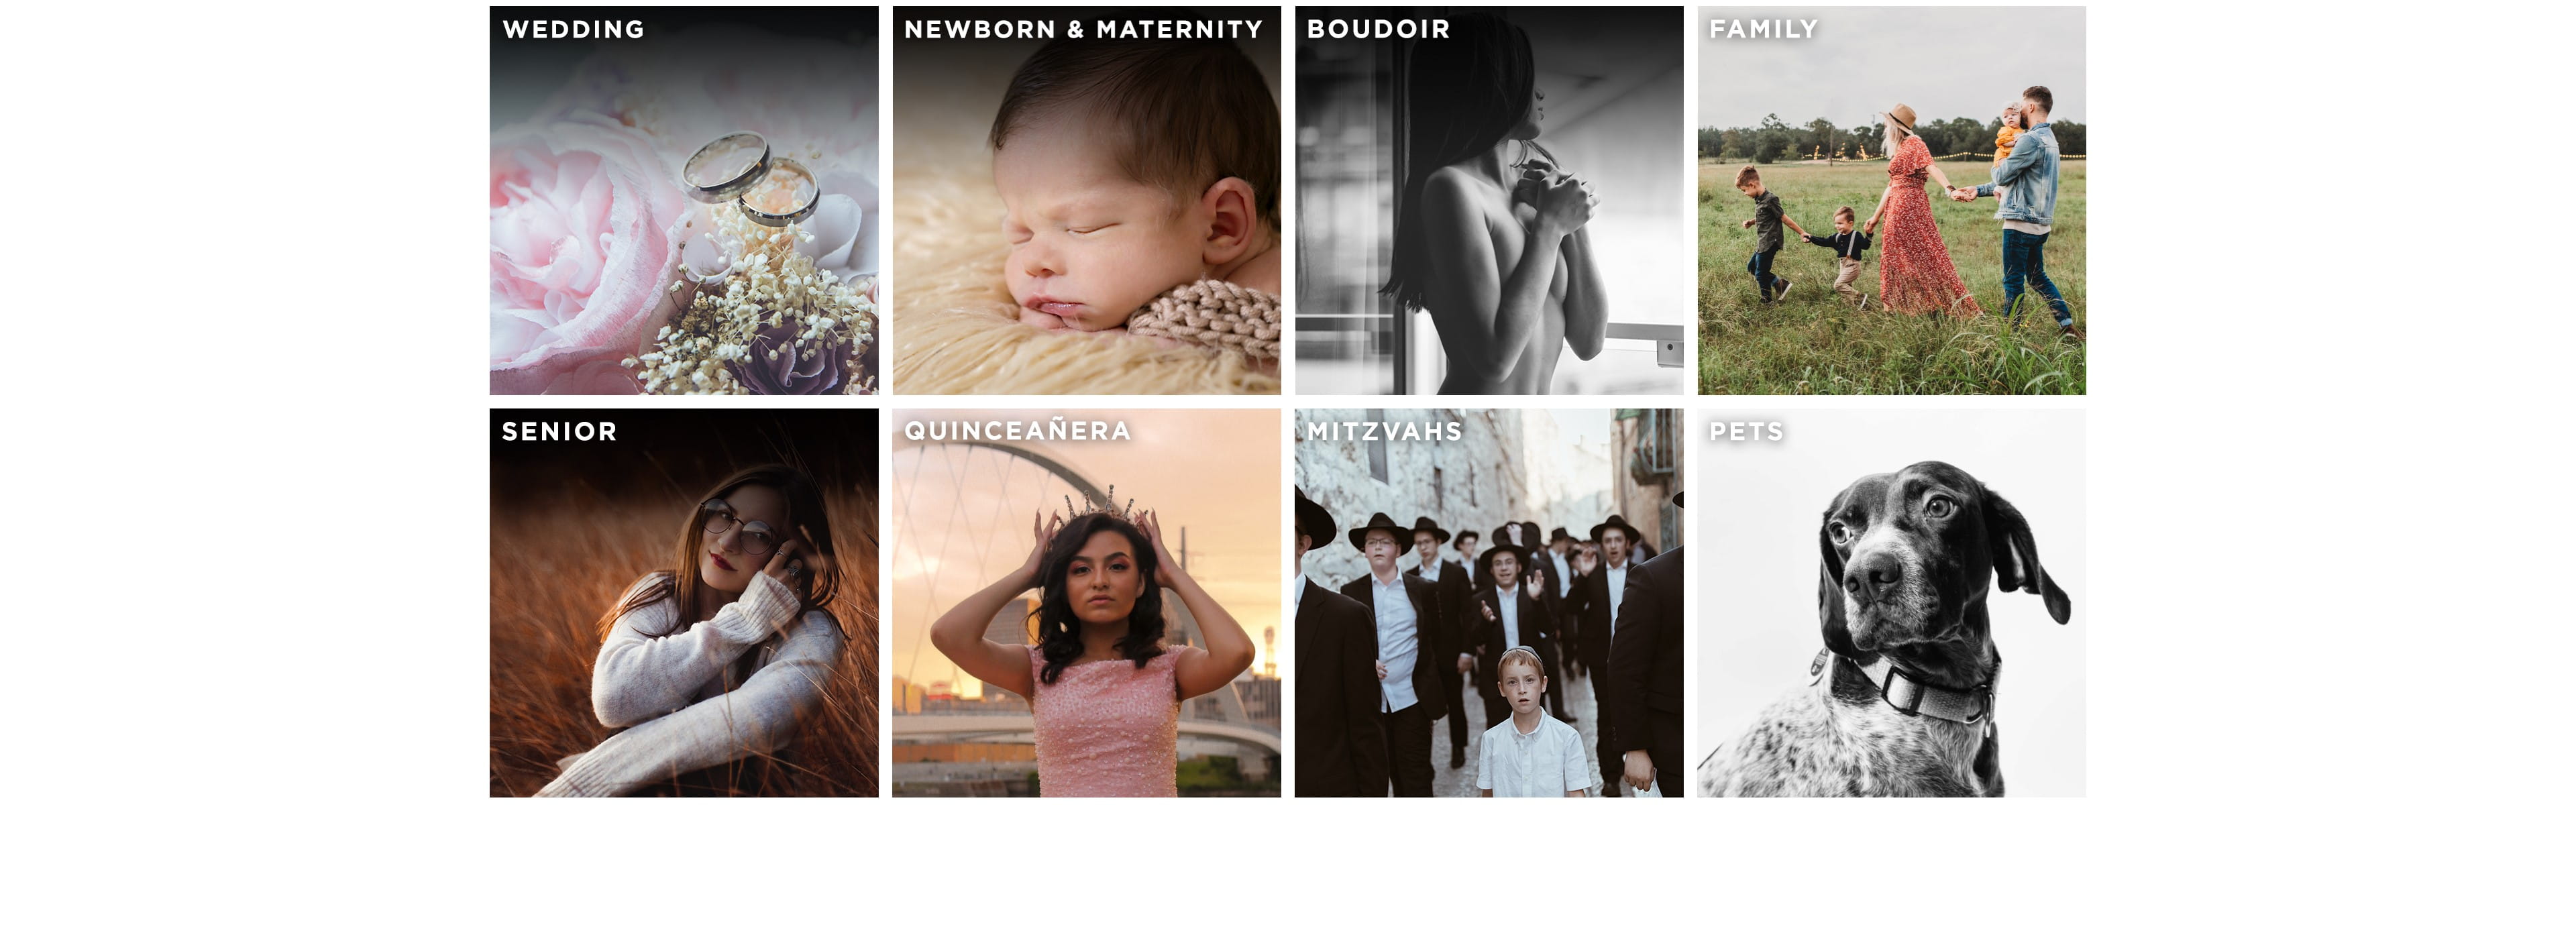 zno slideshow used to create slideshows for wedding, newborn & maternity, boudoir, children, family, seniors, quinceañeras, mitzvahs and pets